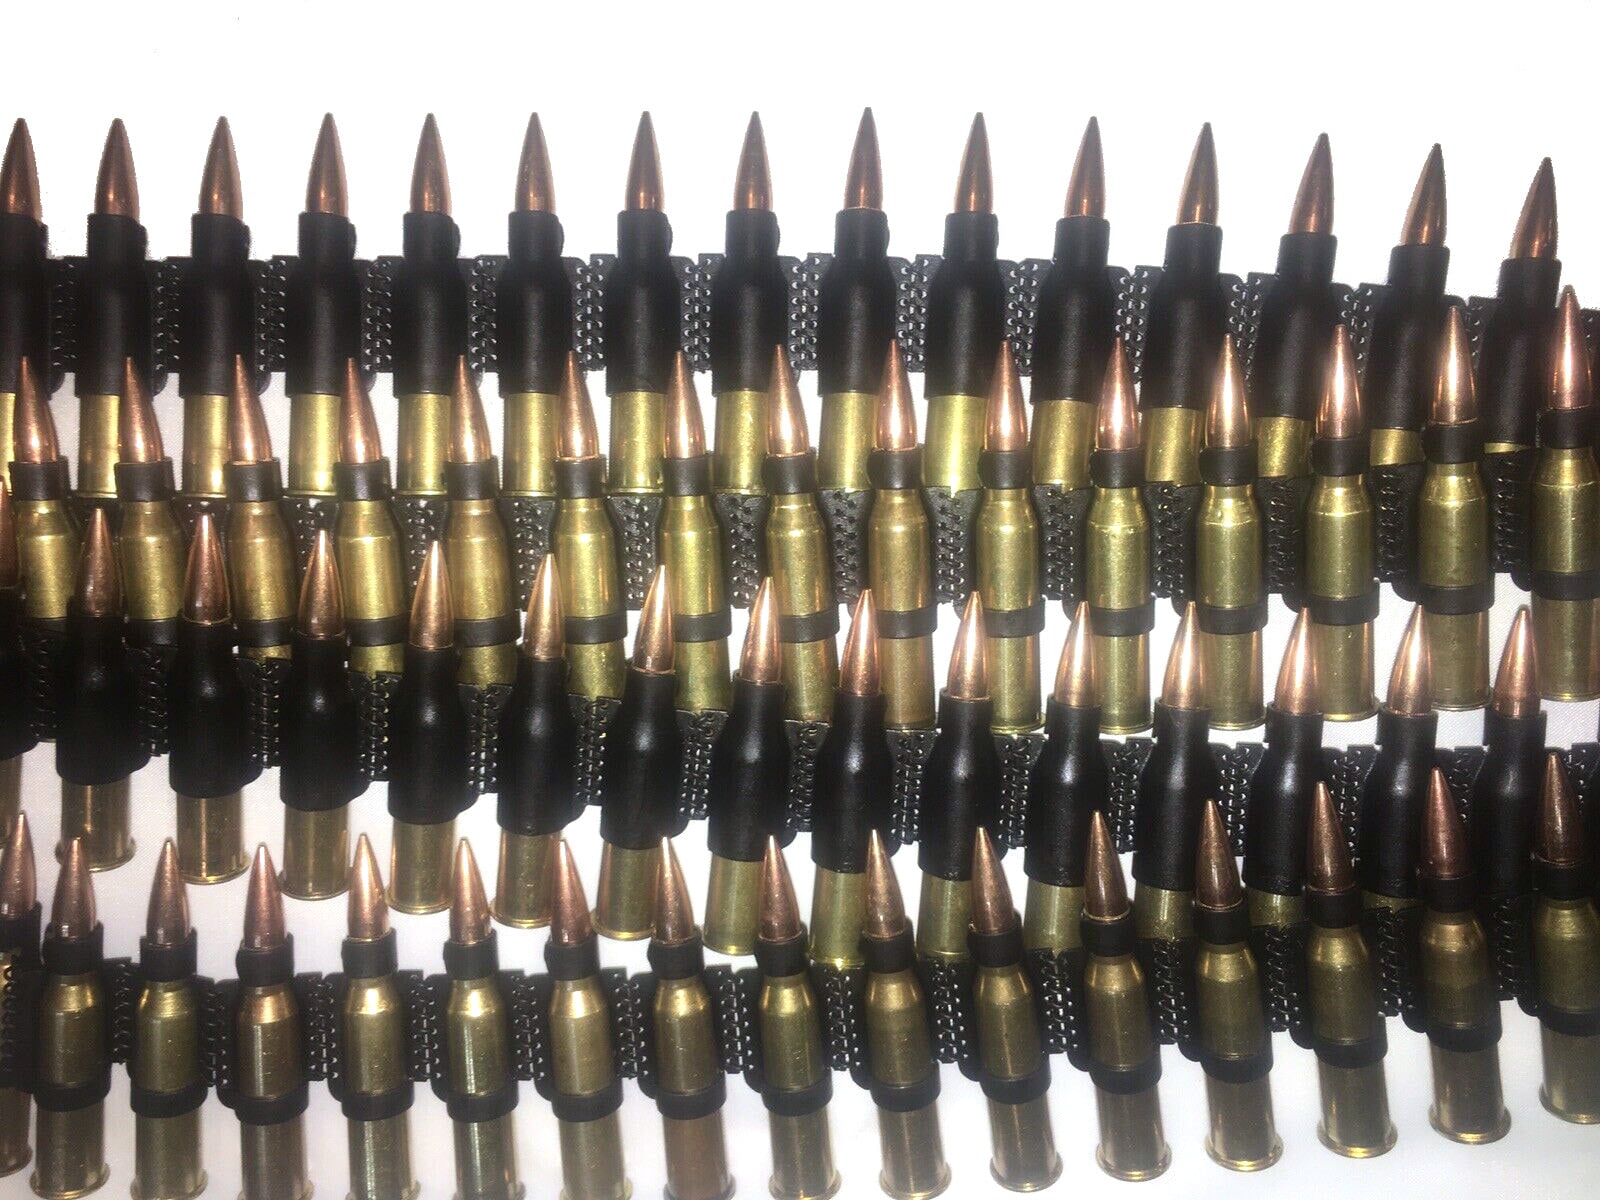 Cinturon de municiones (Ammo belt links) para Mags.